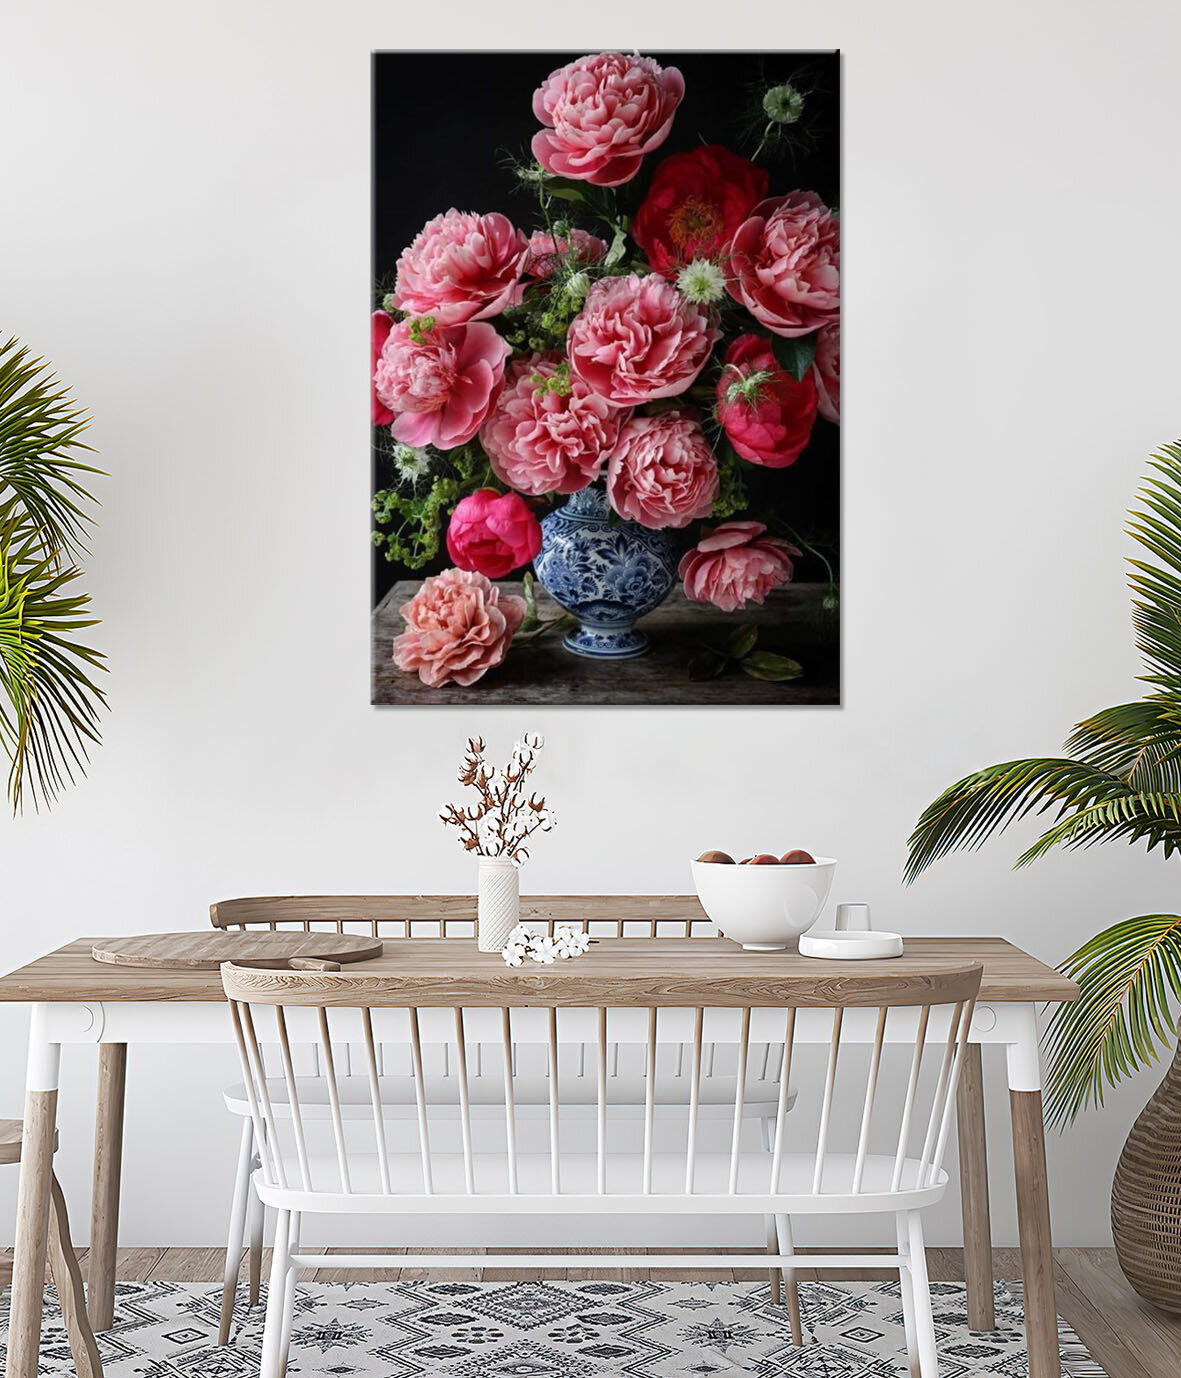 Картина/Картина на холсте/Картина на холсте для интерьера/Картина на стену/Цветы Арт: Пионы (3) - Flowers Art: Peonies (3) 40х60